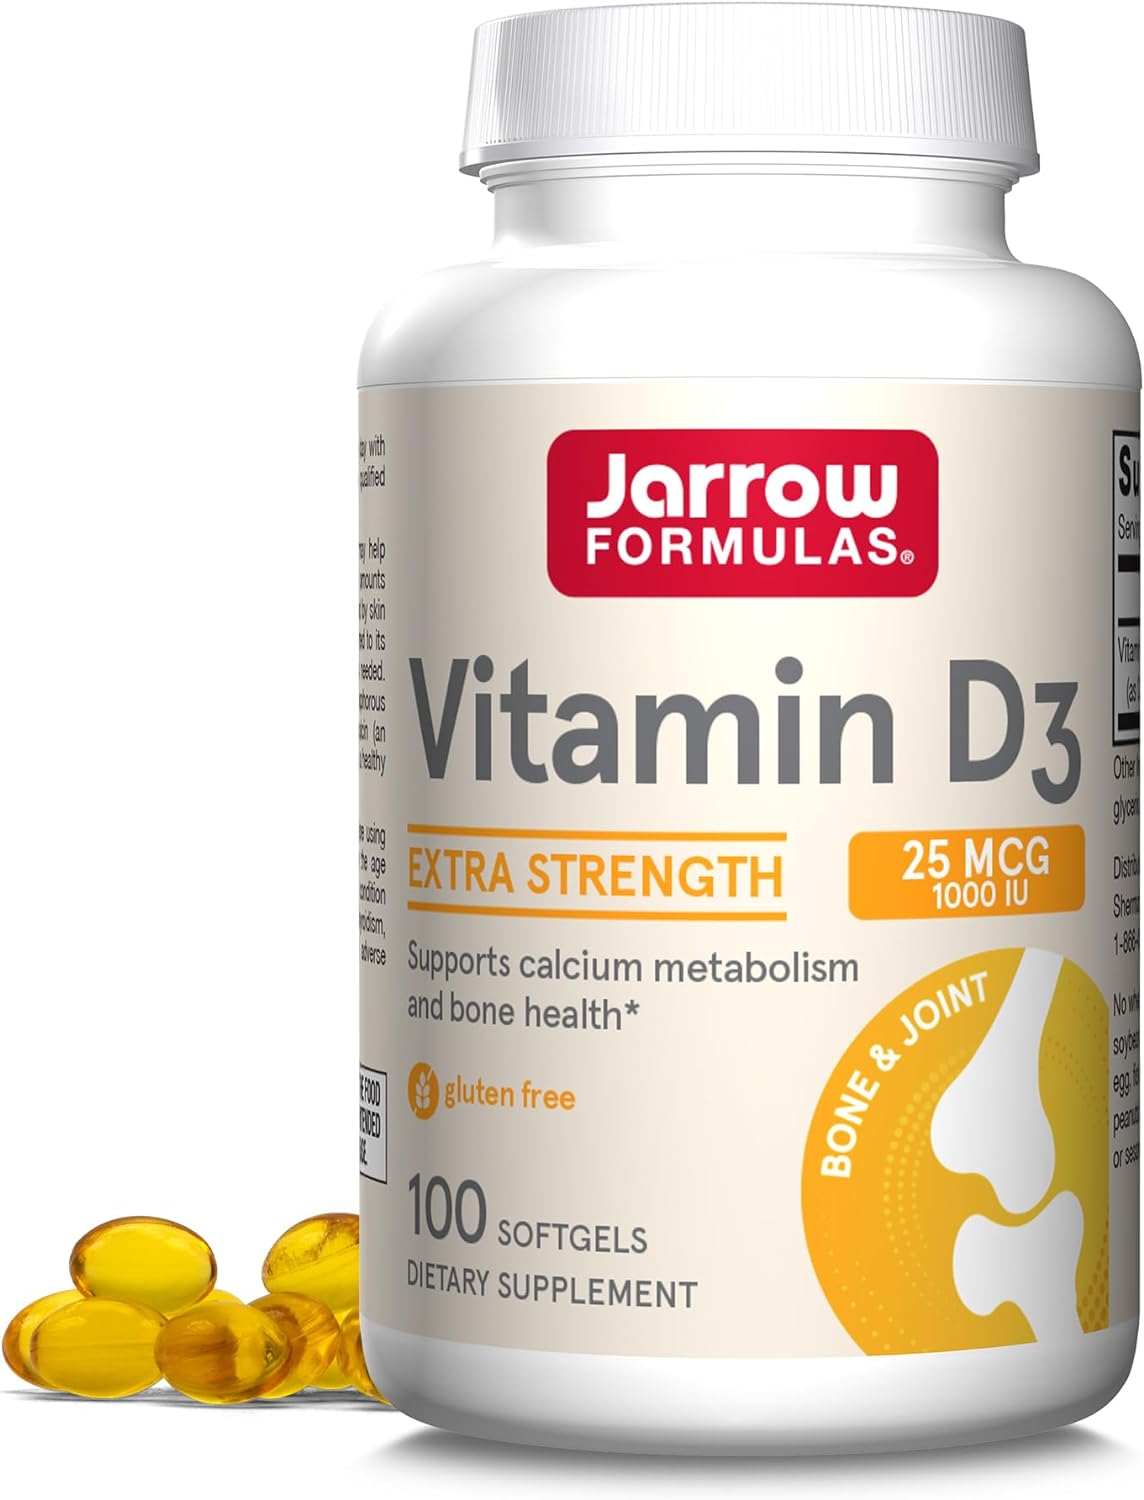 Jarrow Formulas Vitamin D3 25 mcg (1000 IU) - 100 Servings (Softgels) - Bone Health, Immune Support  Calcium Metabolism Support - Vitamin D Supplement - D3 Vitamins - 1000 Vitamin D - Gluten Free